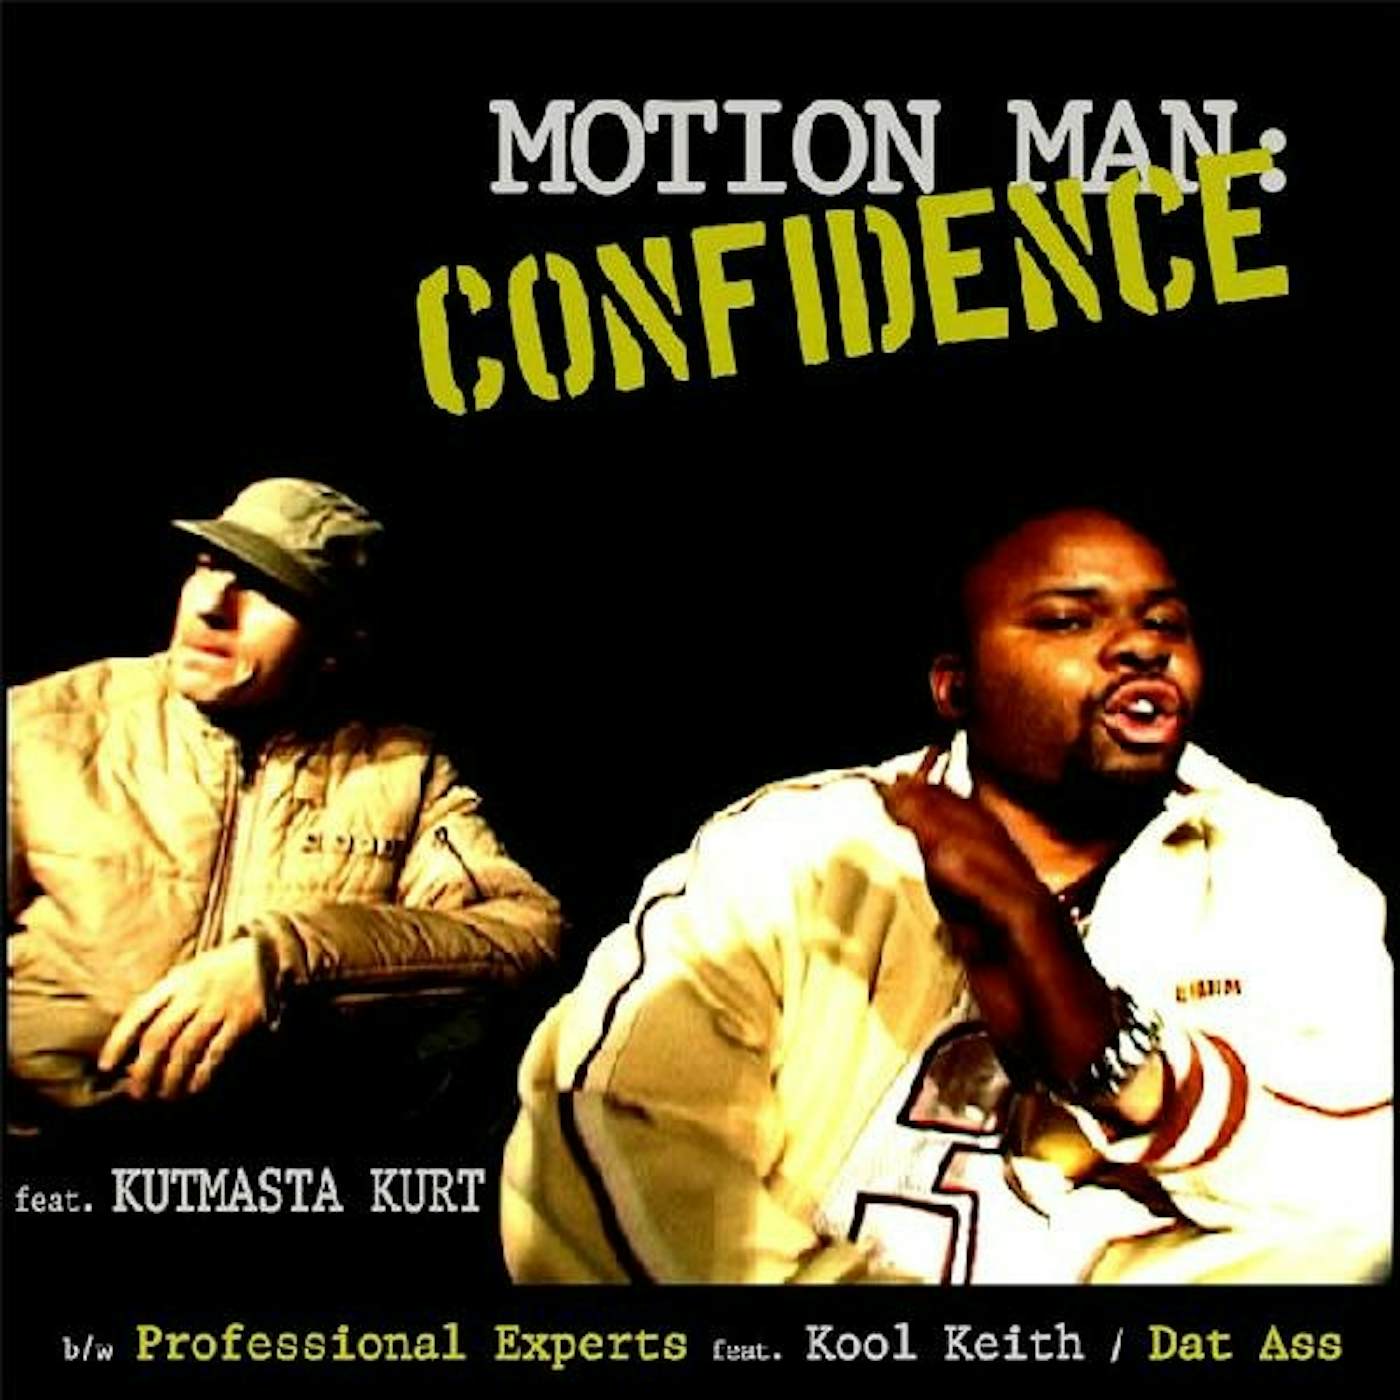 Motion Man CONFIDENCE Vinyl Record